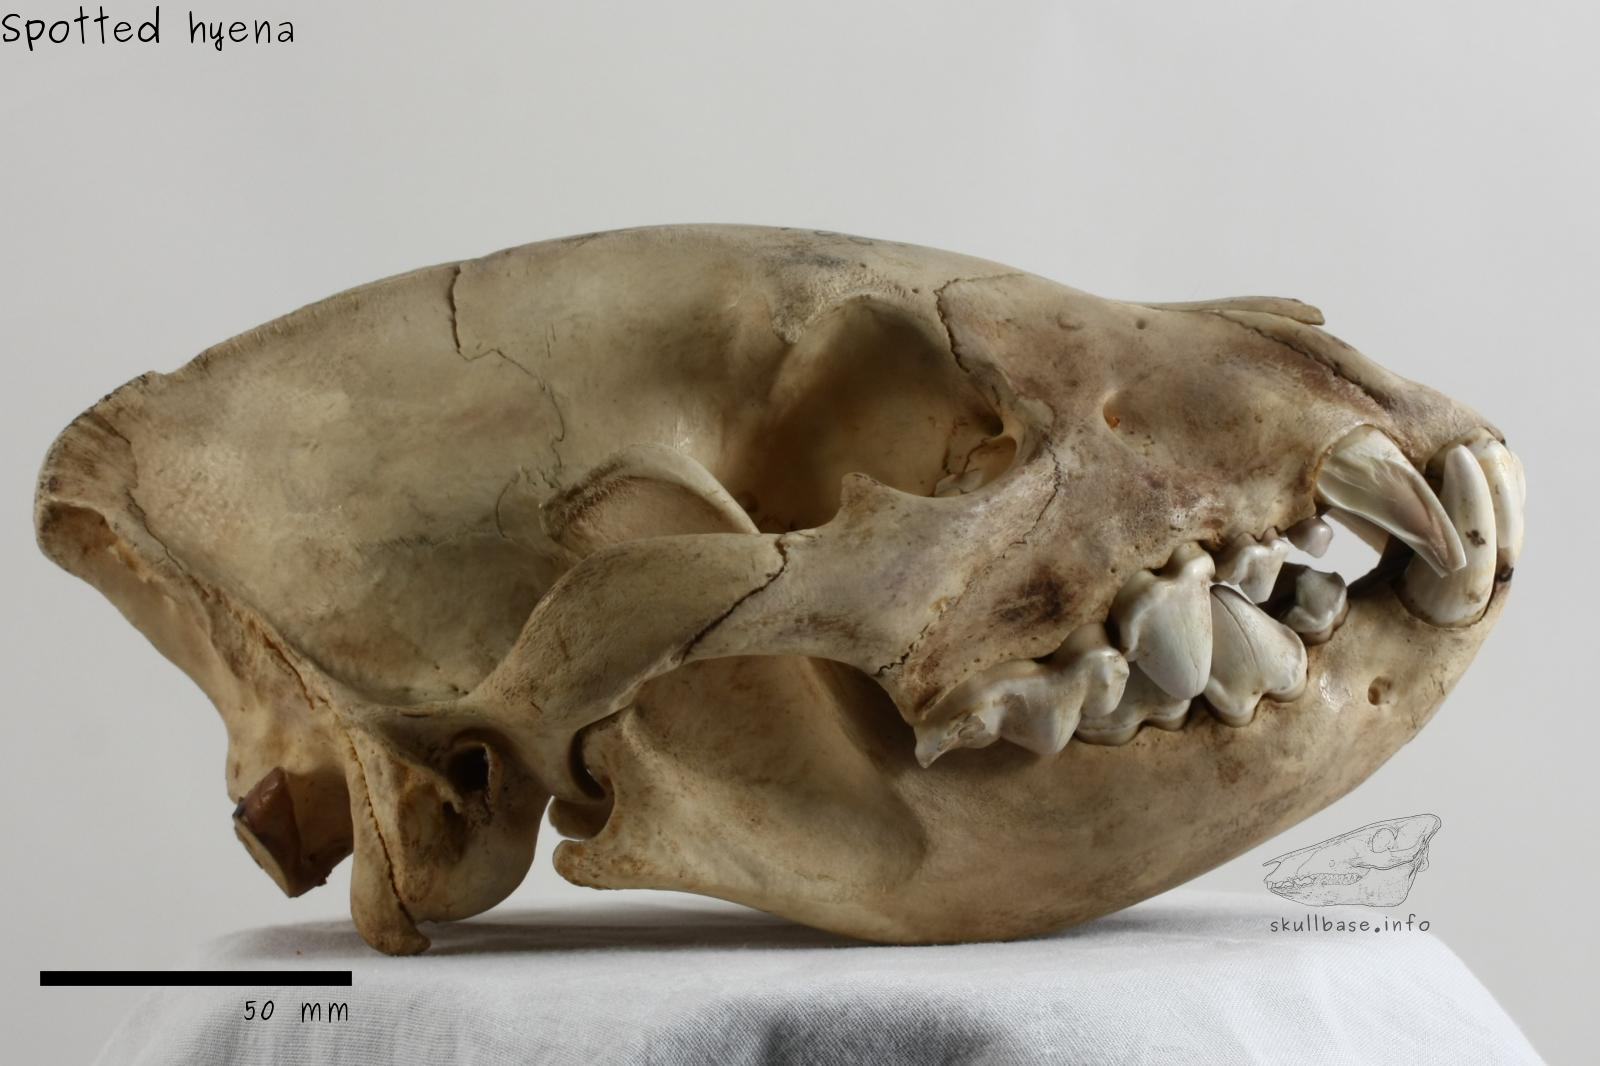 Spotted hyena (Crocuta crocuta) skull lateral view